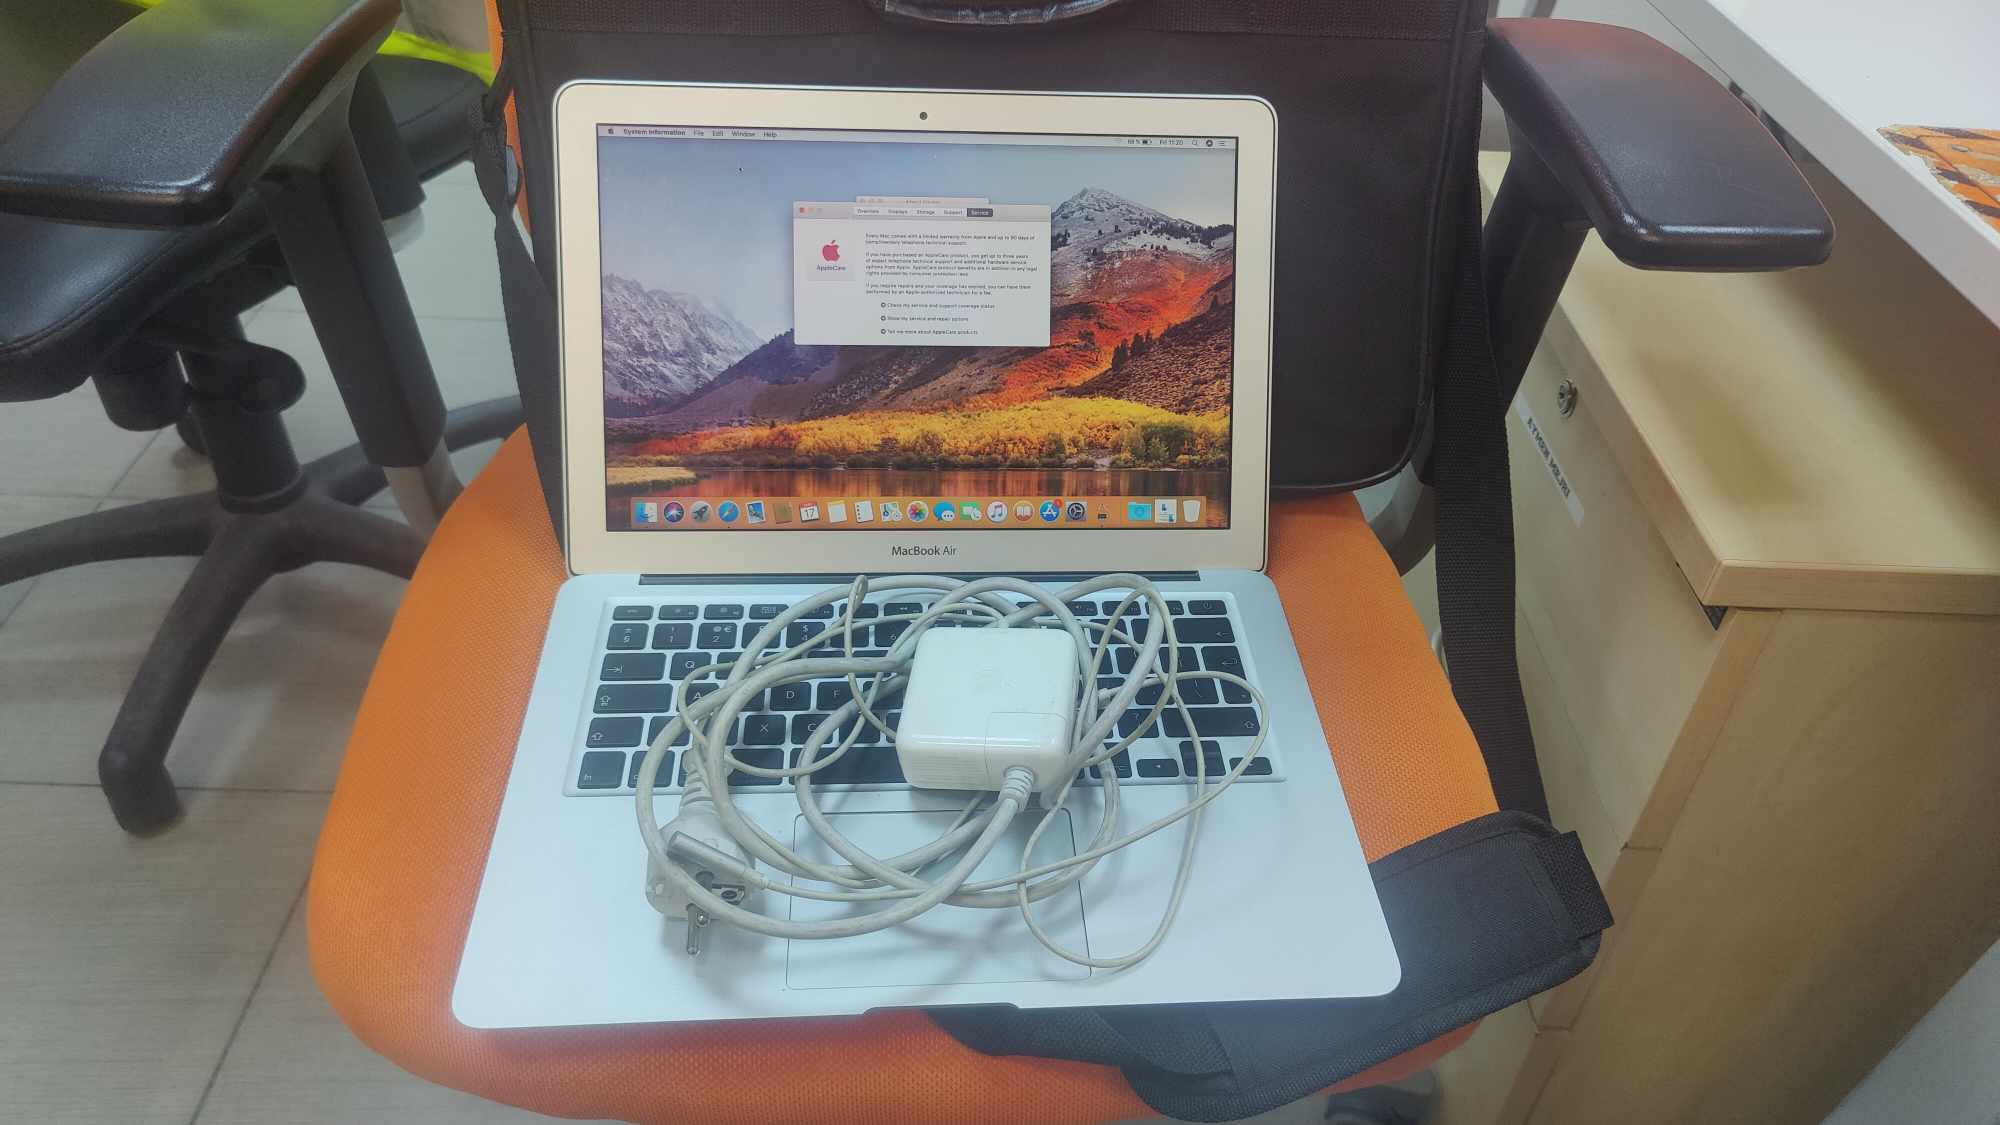 Sidi El Bechir Monfleury Apple / MacBook MacBook Air 13 pouces Macbook air 13 pouces